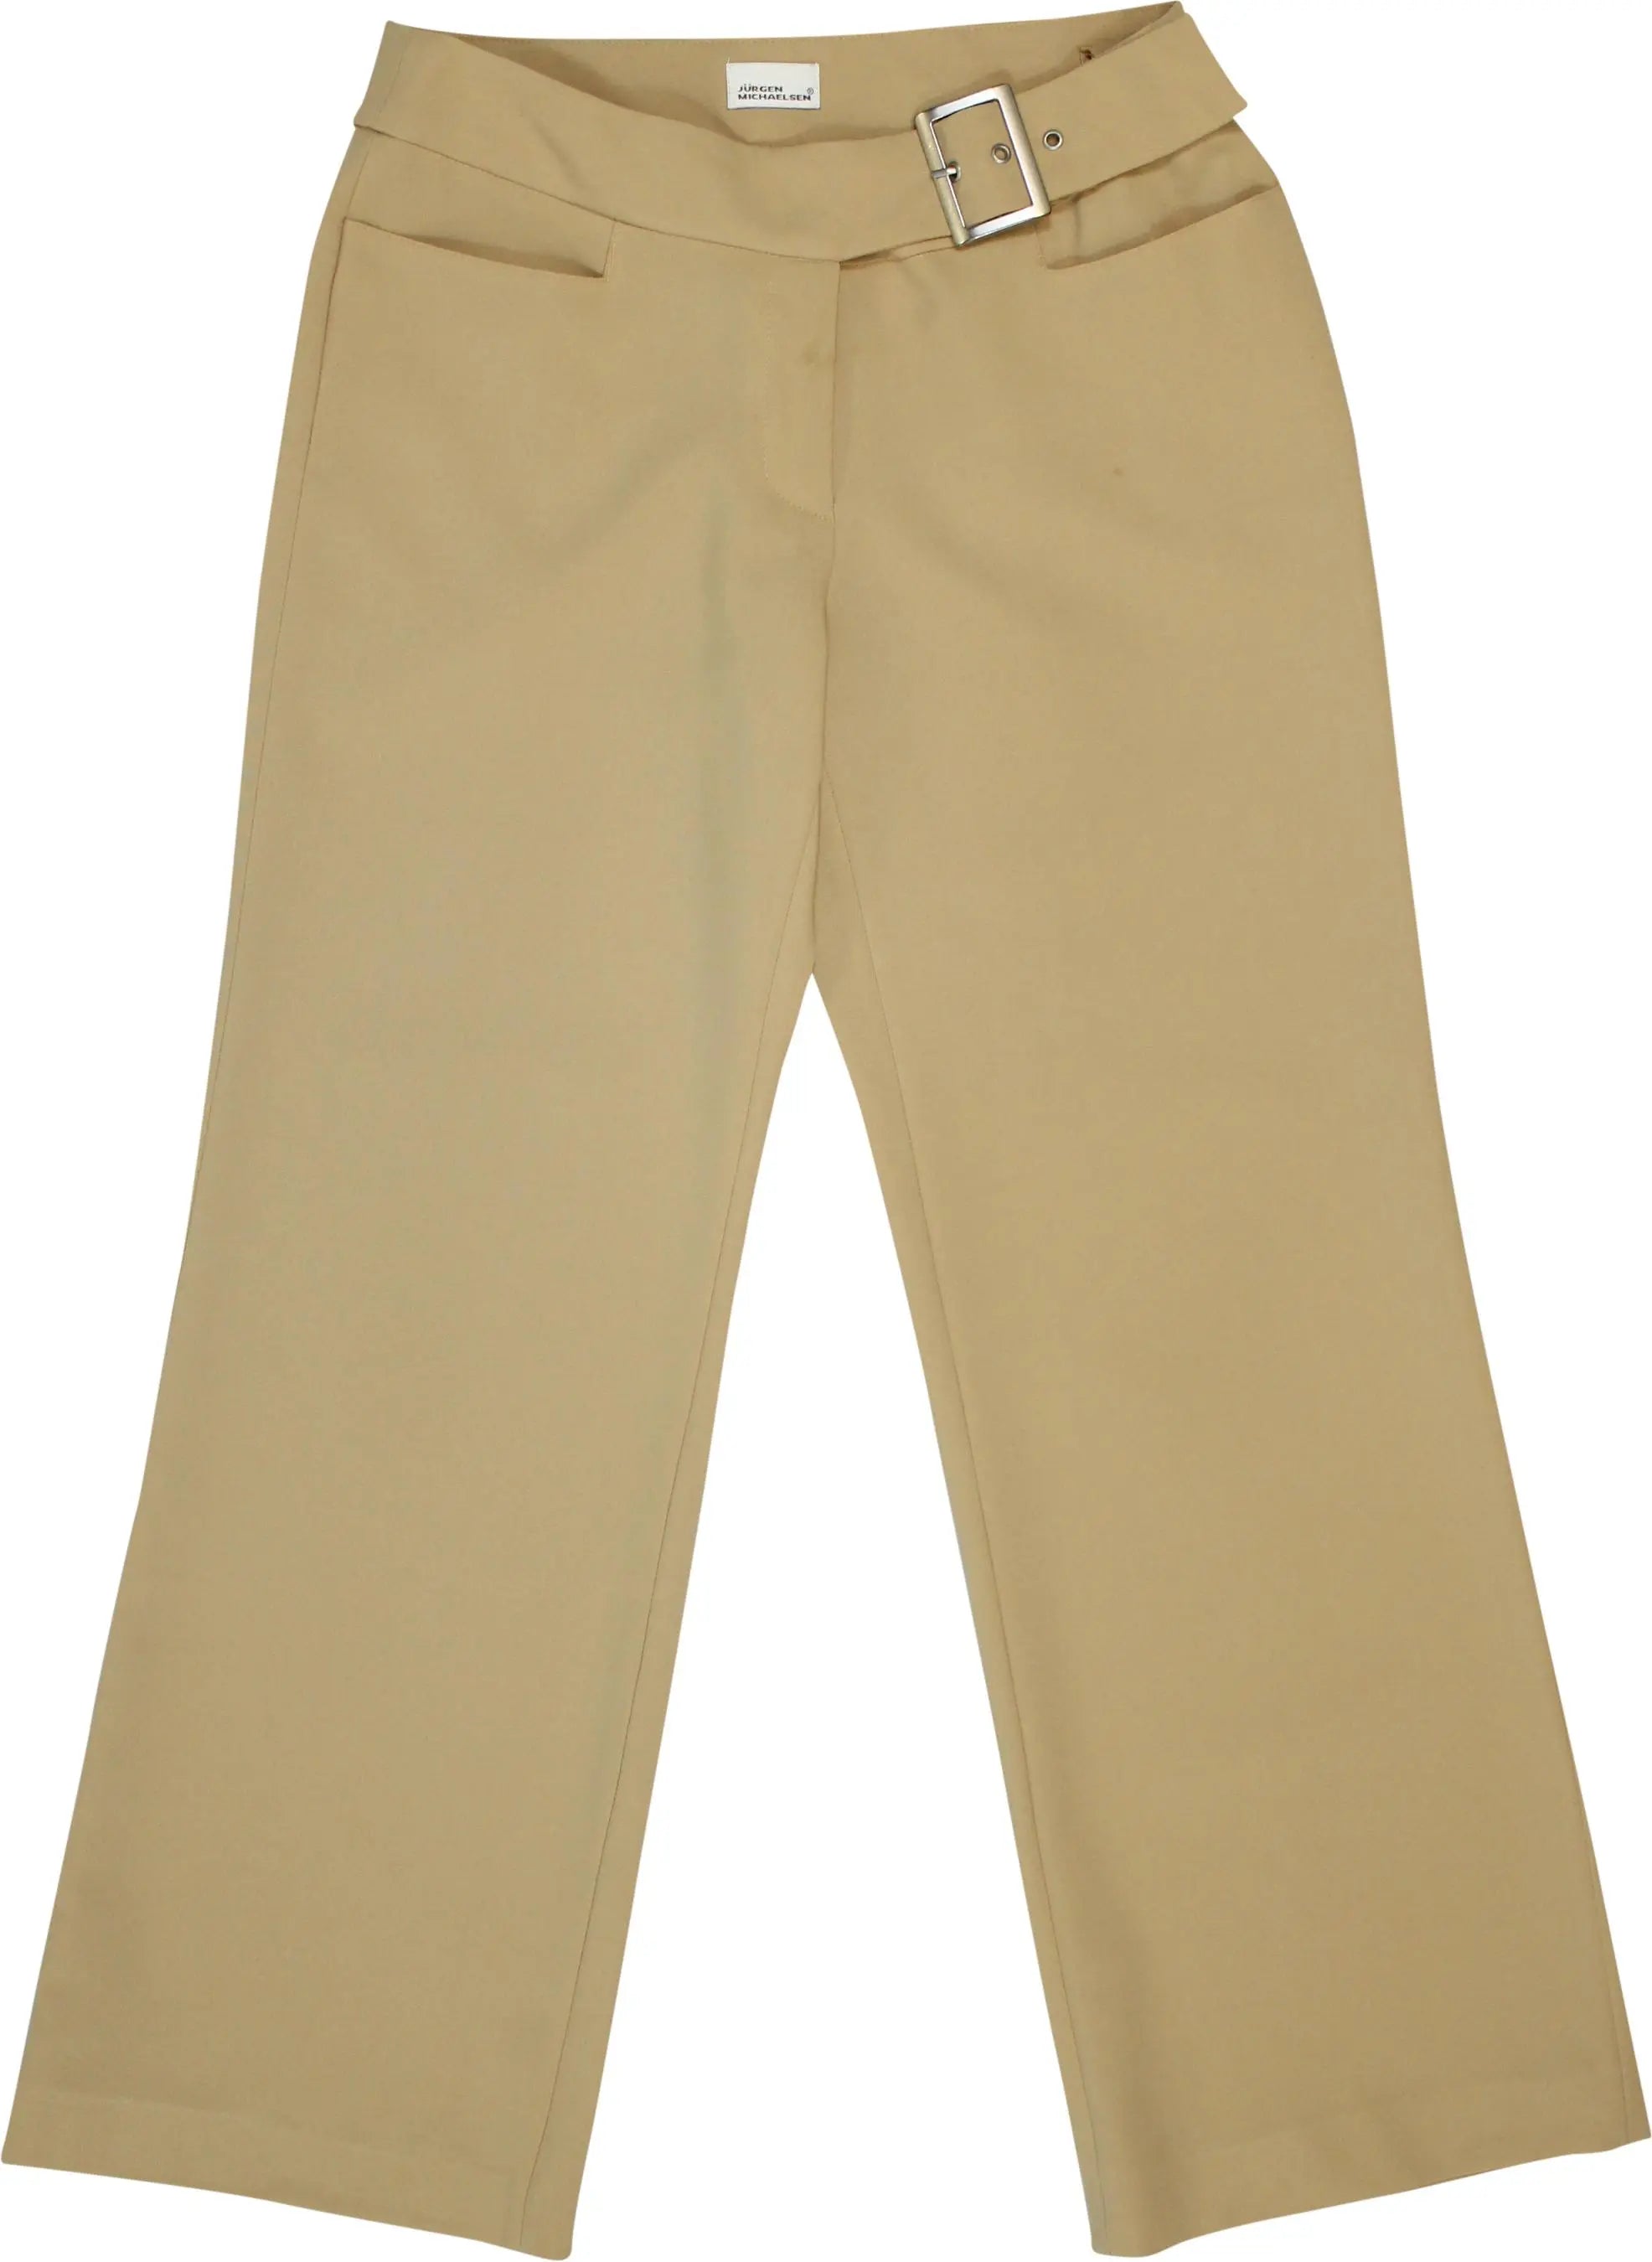 Jurgen Michaelsen - 00s Beige Trousers- ThriftTale.com - Vintage and second handclothing